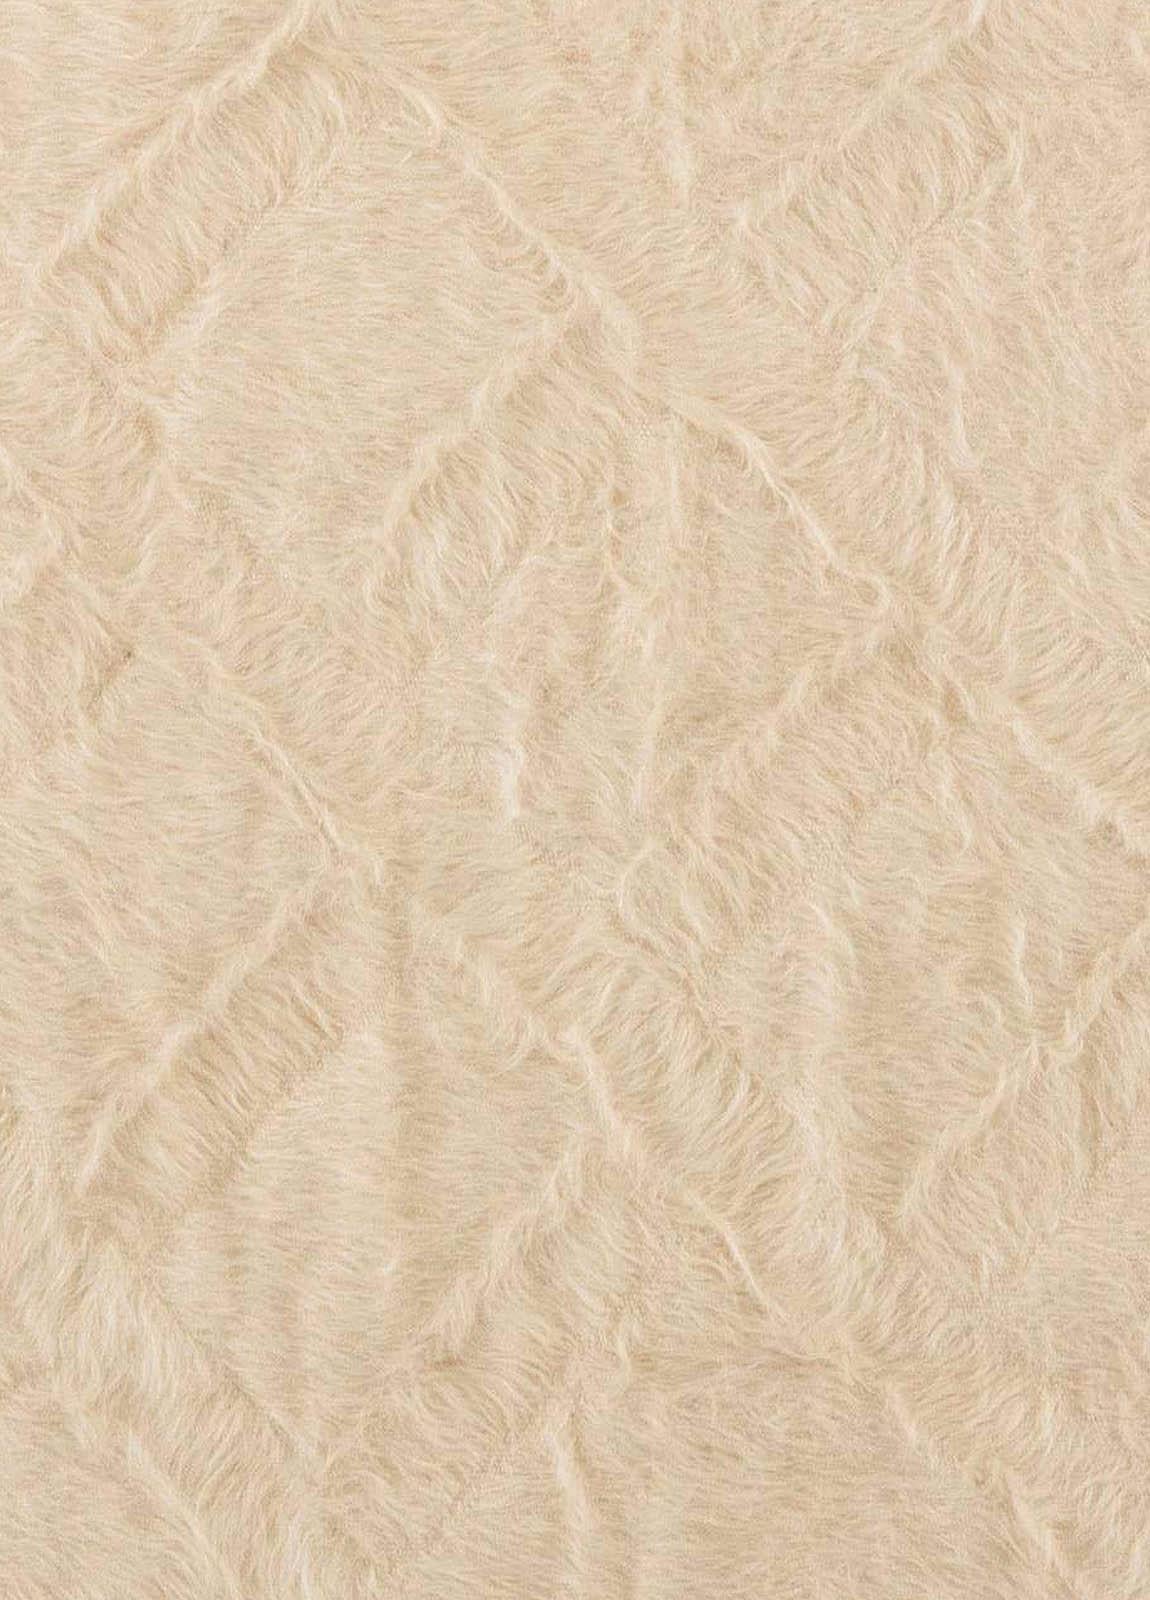 Modern goat hair beige Taurus Collection rug by Doris Leslie Blau.
Size: 4'0